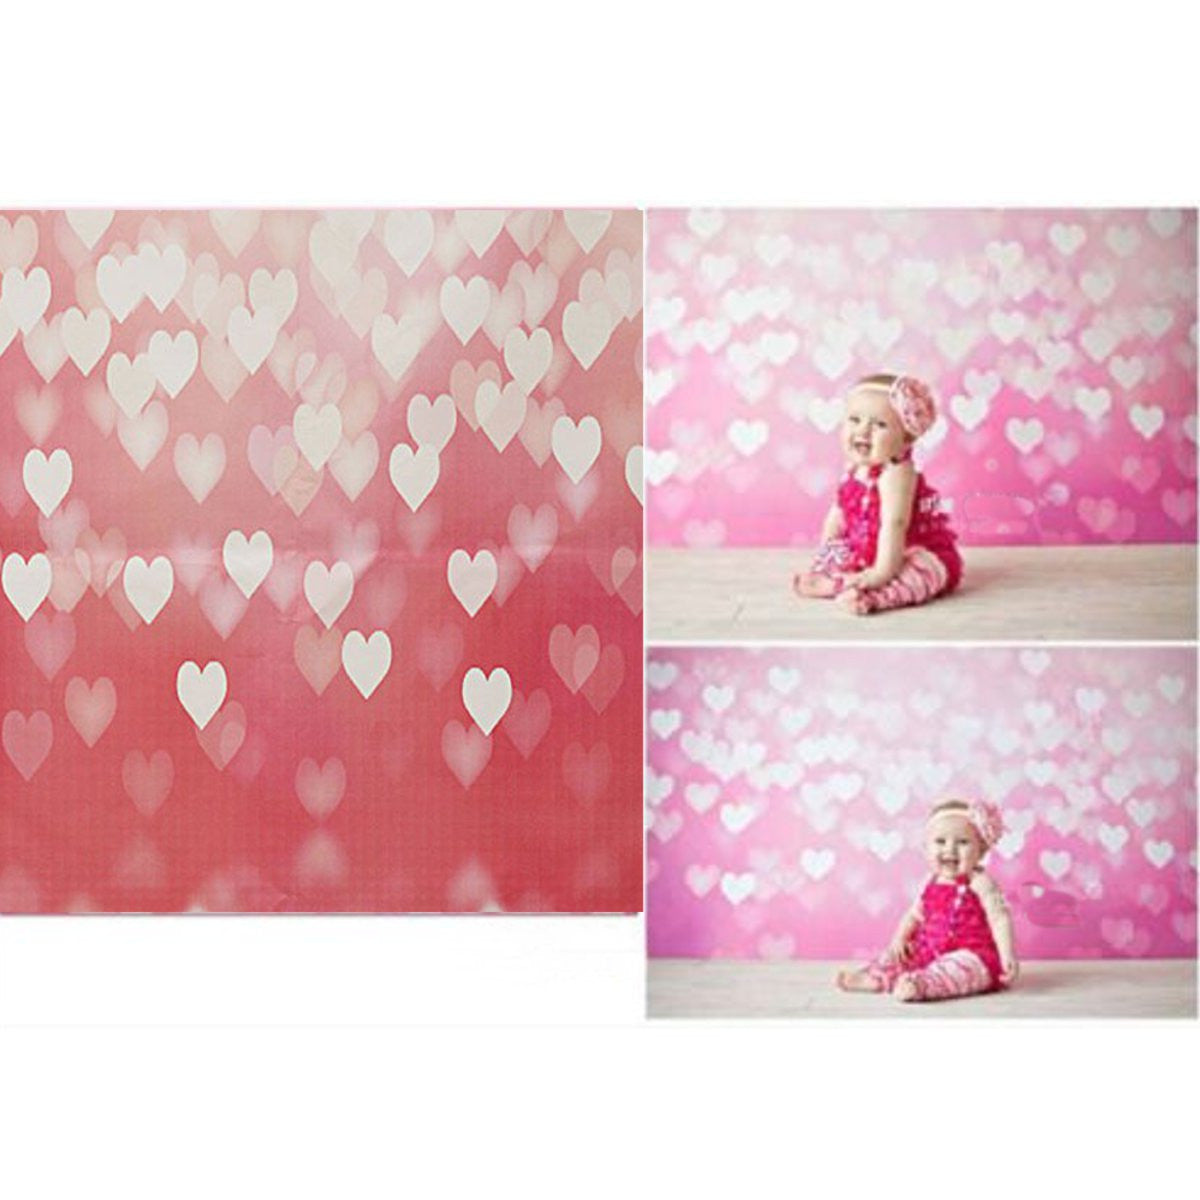 3x5ft Vinyl Heart Birthday Weeding Photography Studio Backdrop Photo Background props